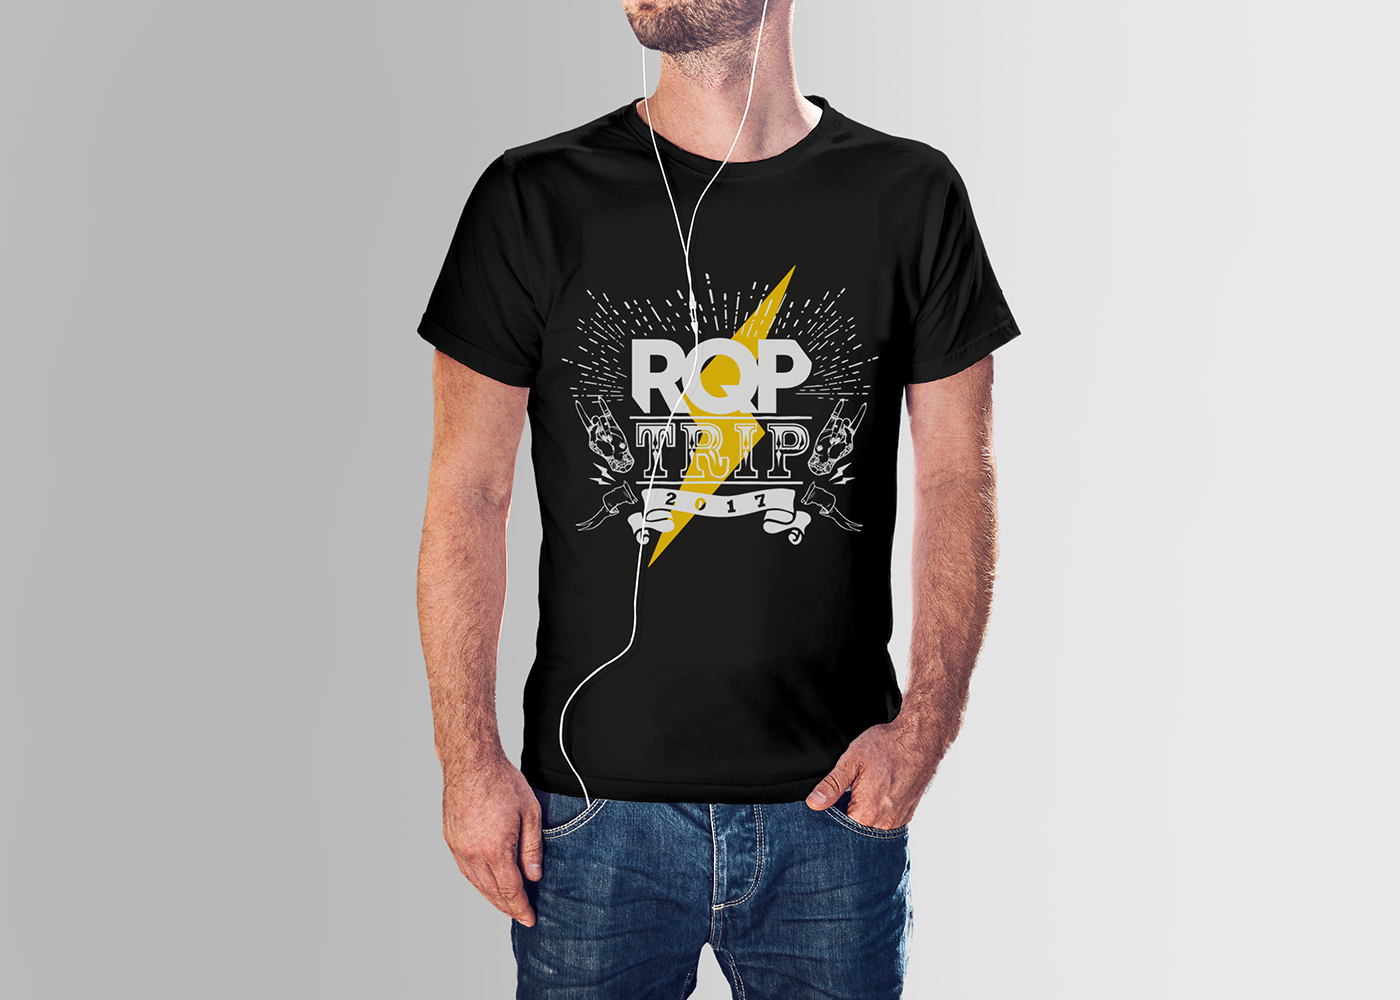 RQP Radio rock trip rock trip music festival Concurso concert